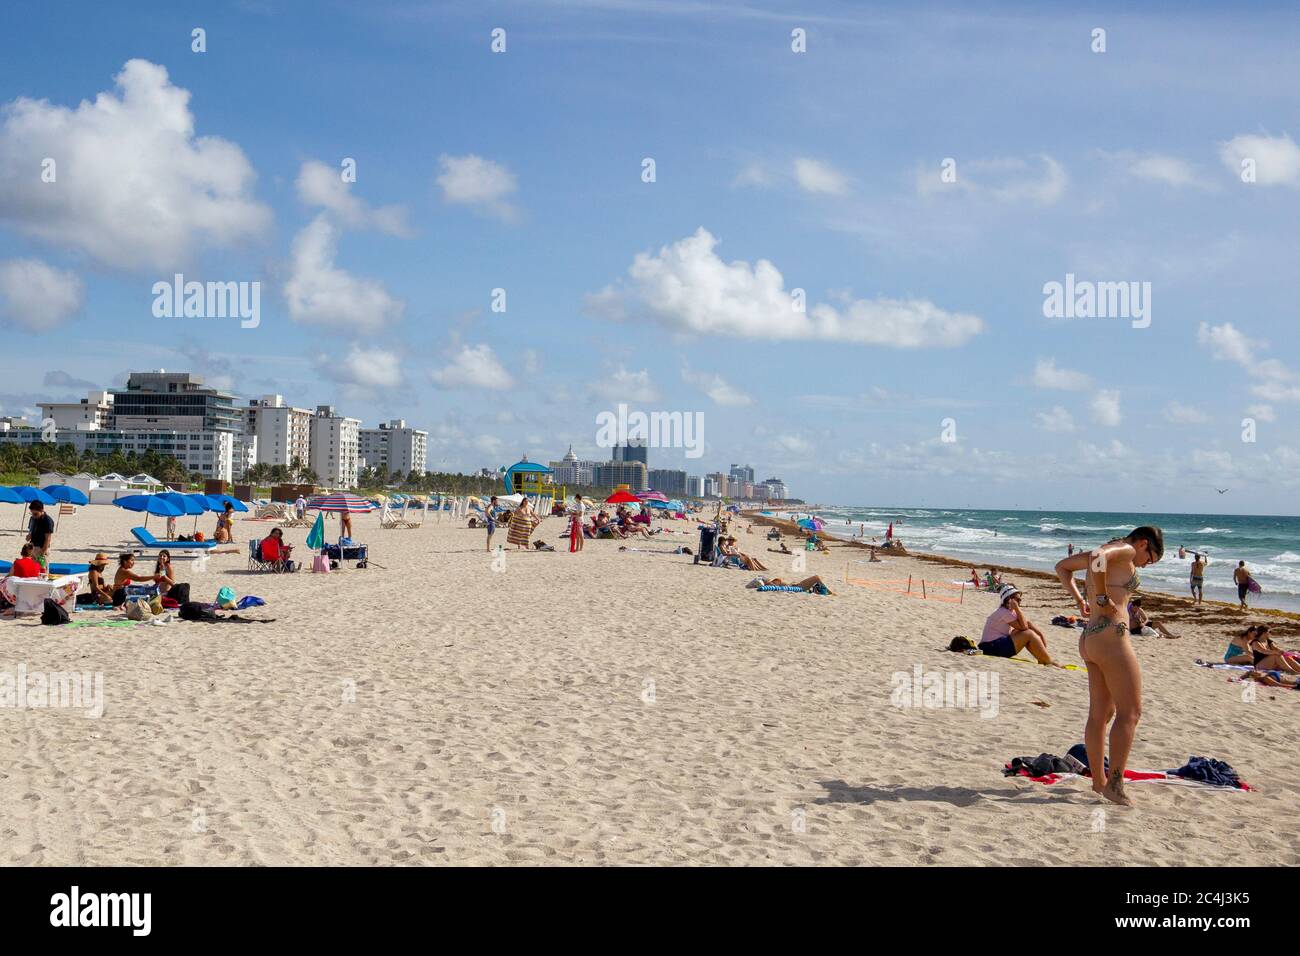 The beach at South Pointe Park, South Beach, Miami Florida. Stock Photo